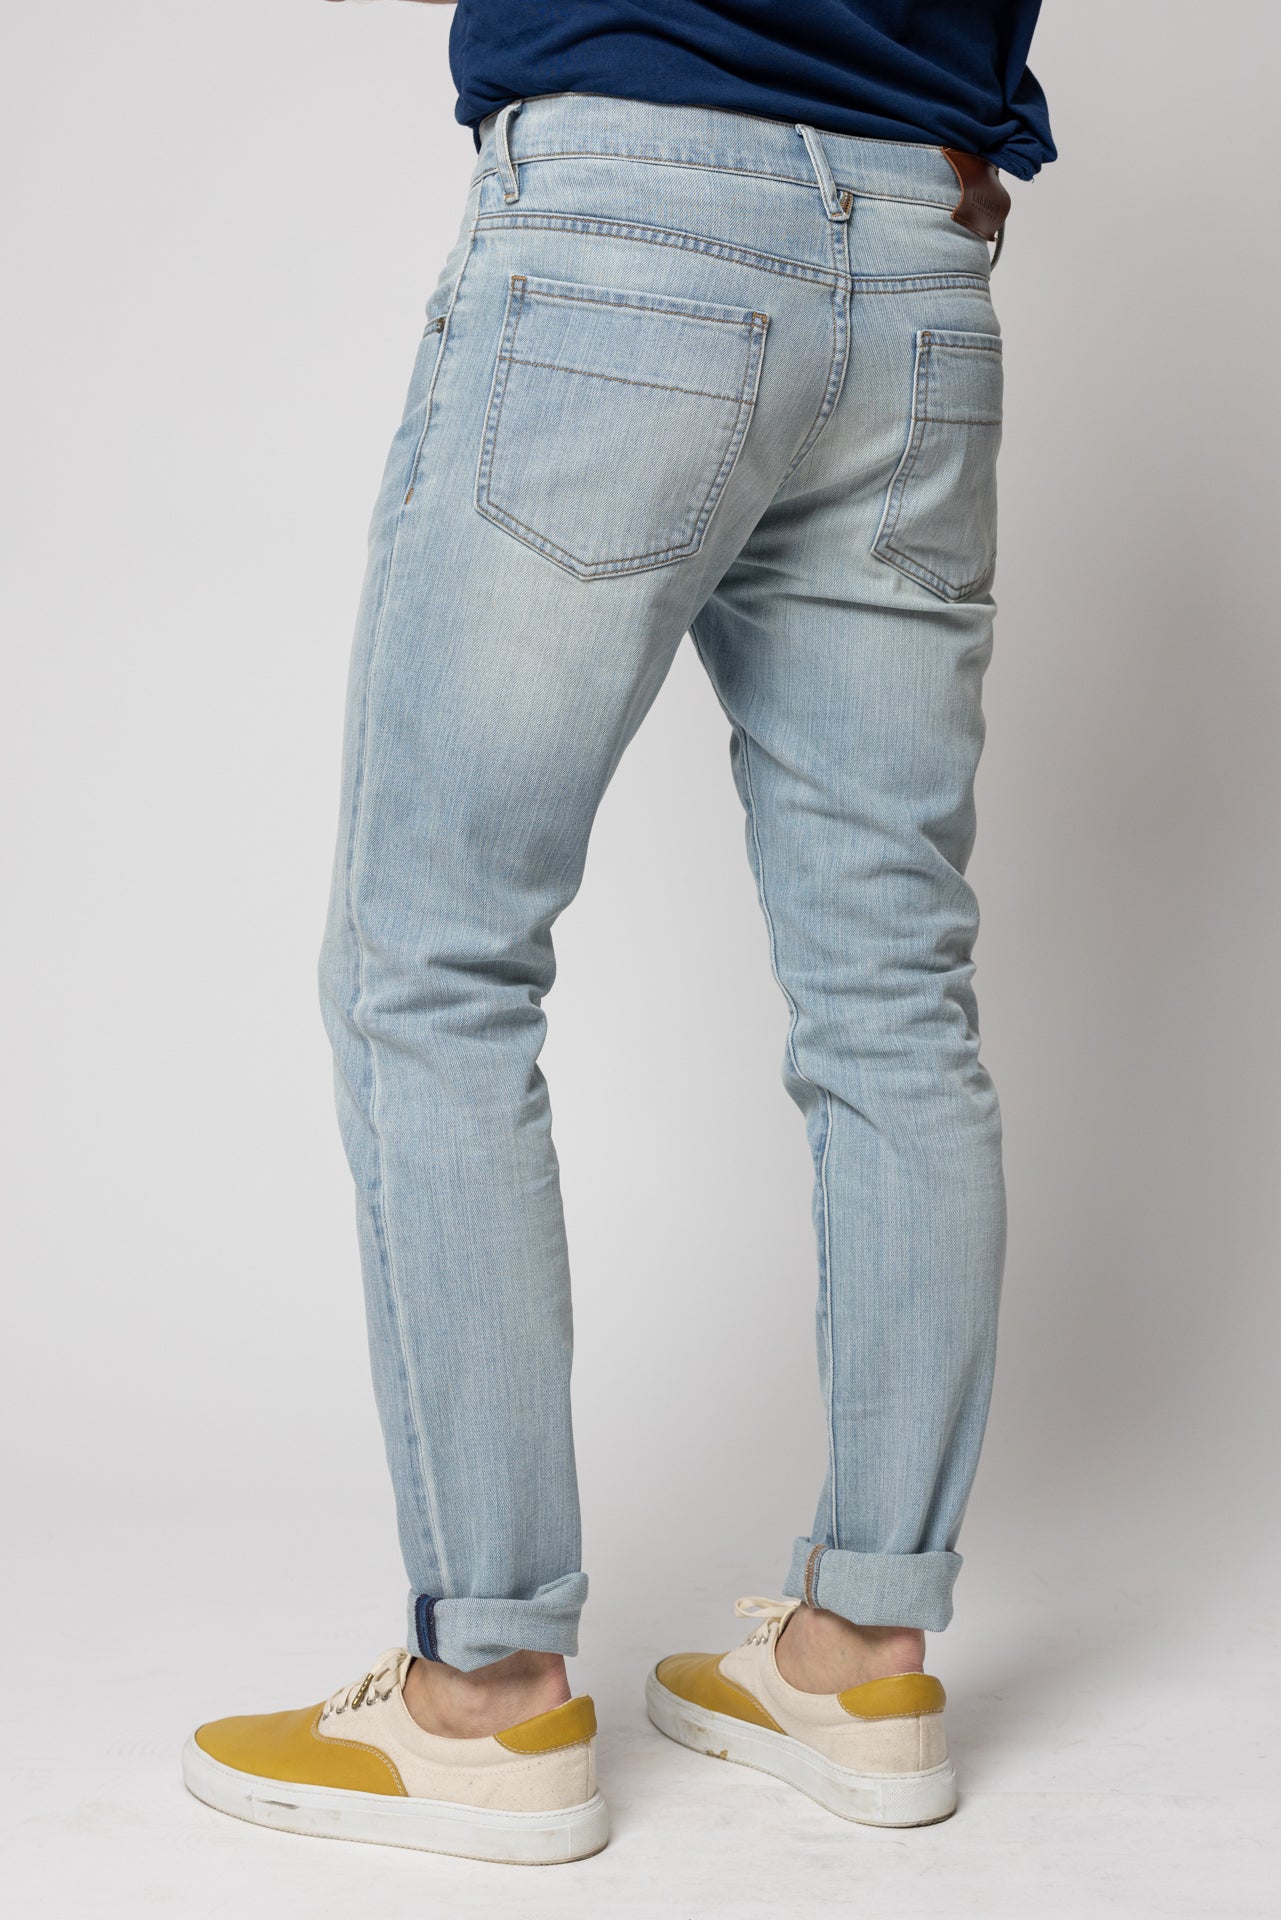 angle: Martin Lookout Man wearing light blue denim jean in Martin Lookout